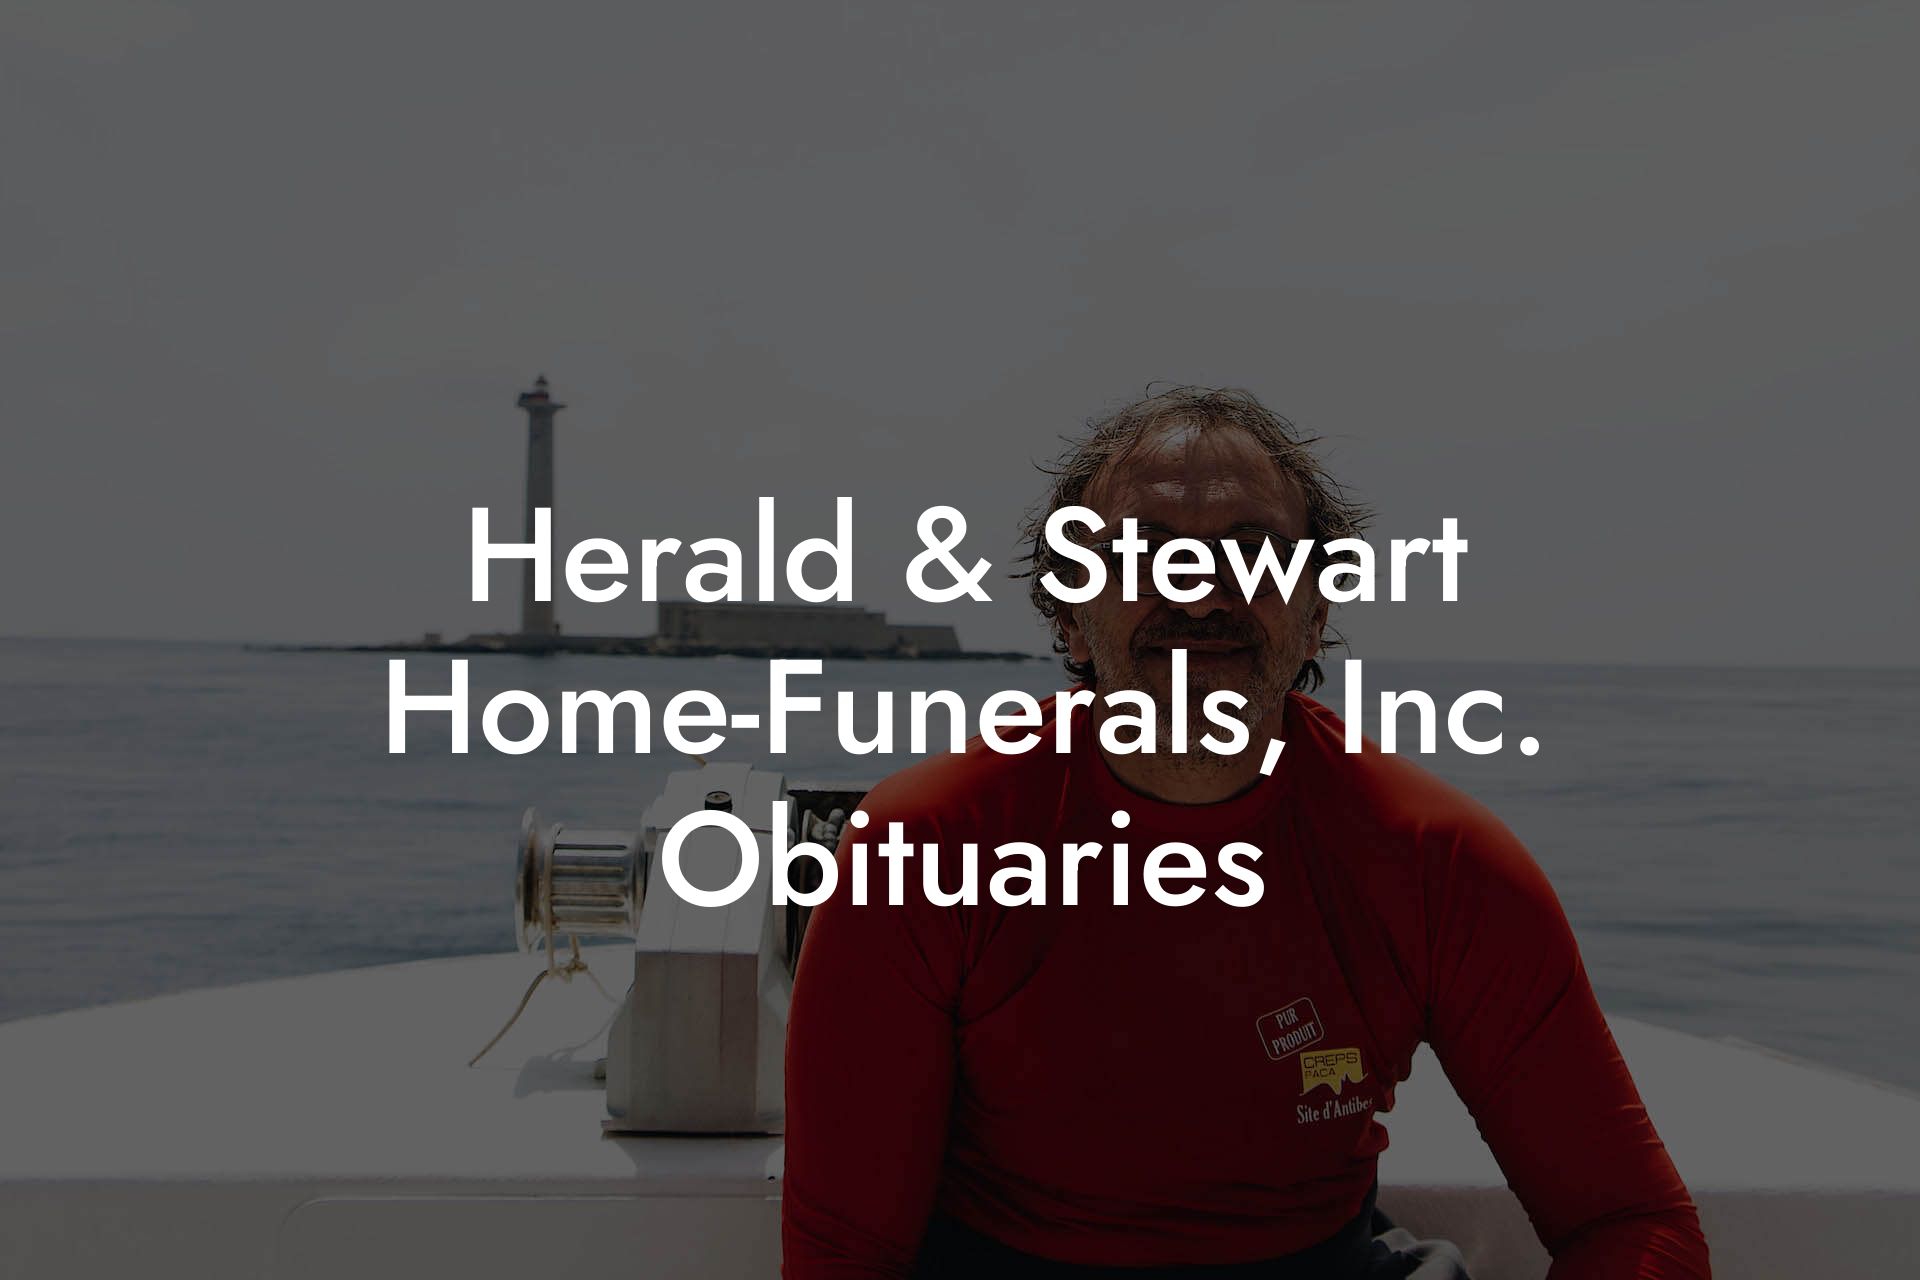 Herald & Stewart Home-Funerals, Inc. Obituaries